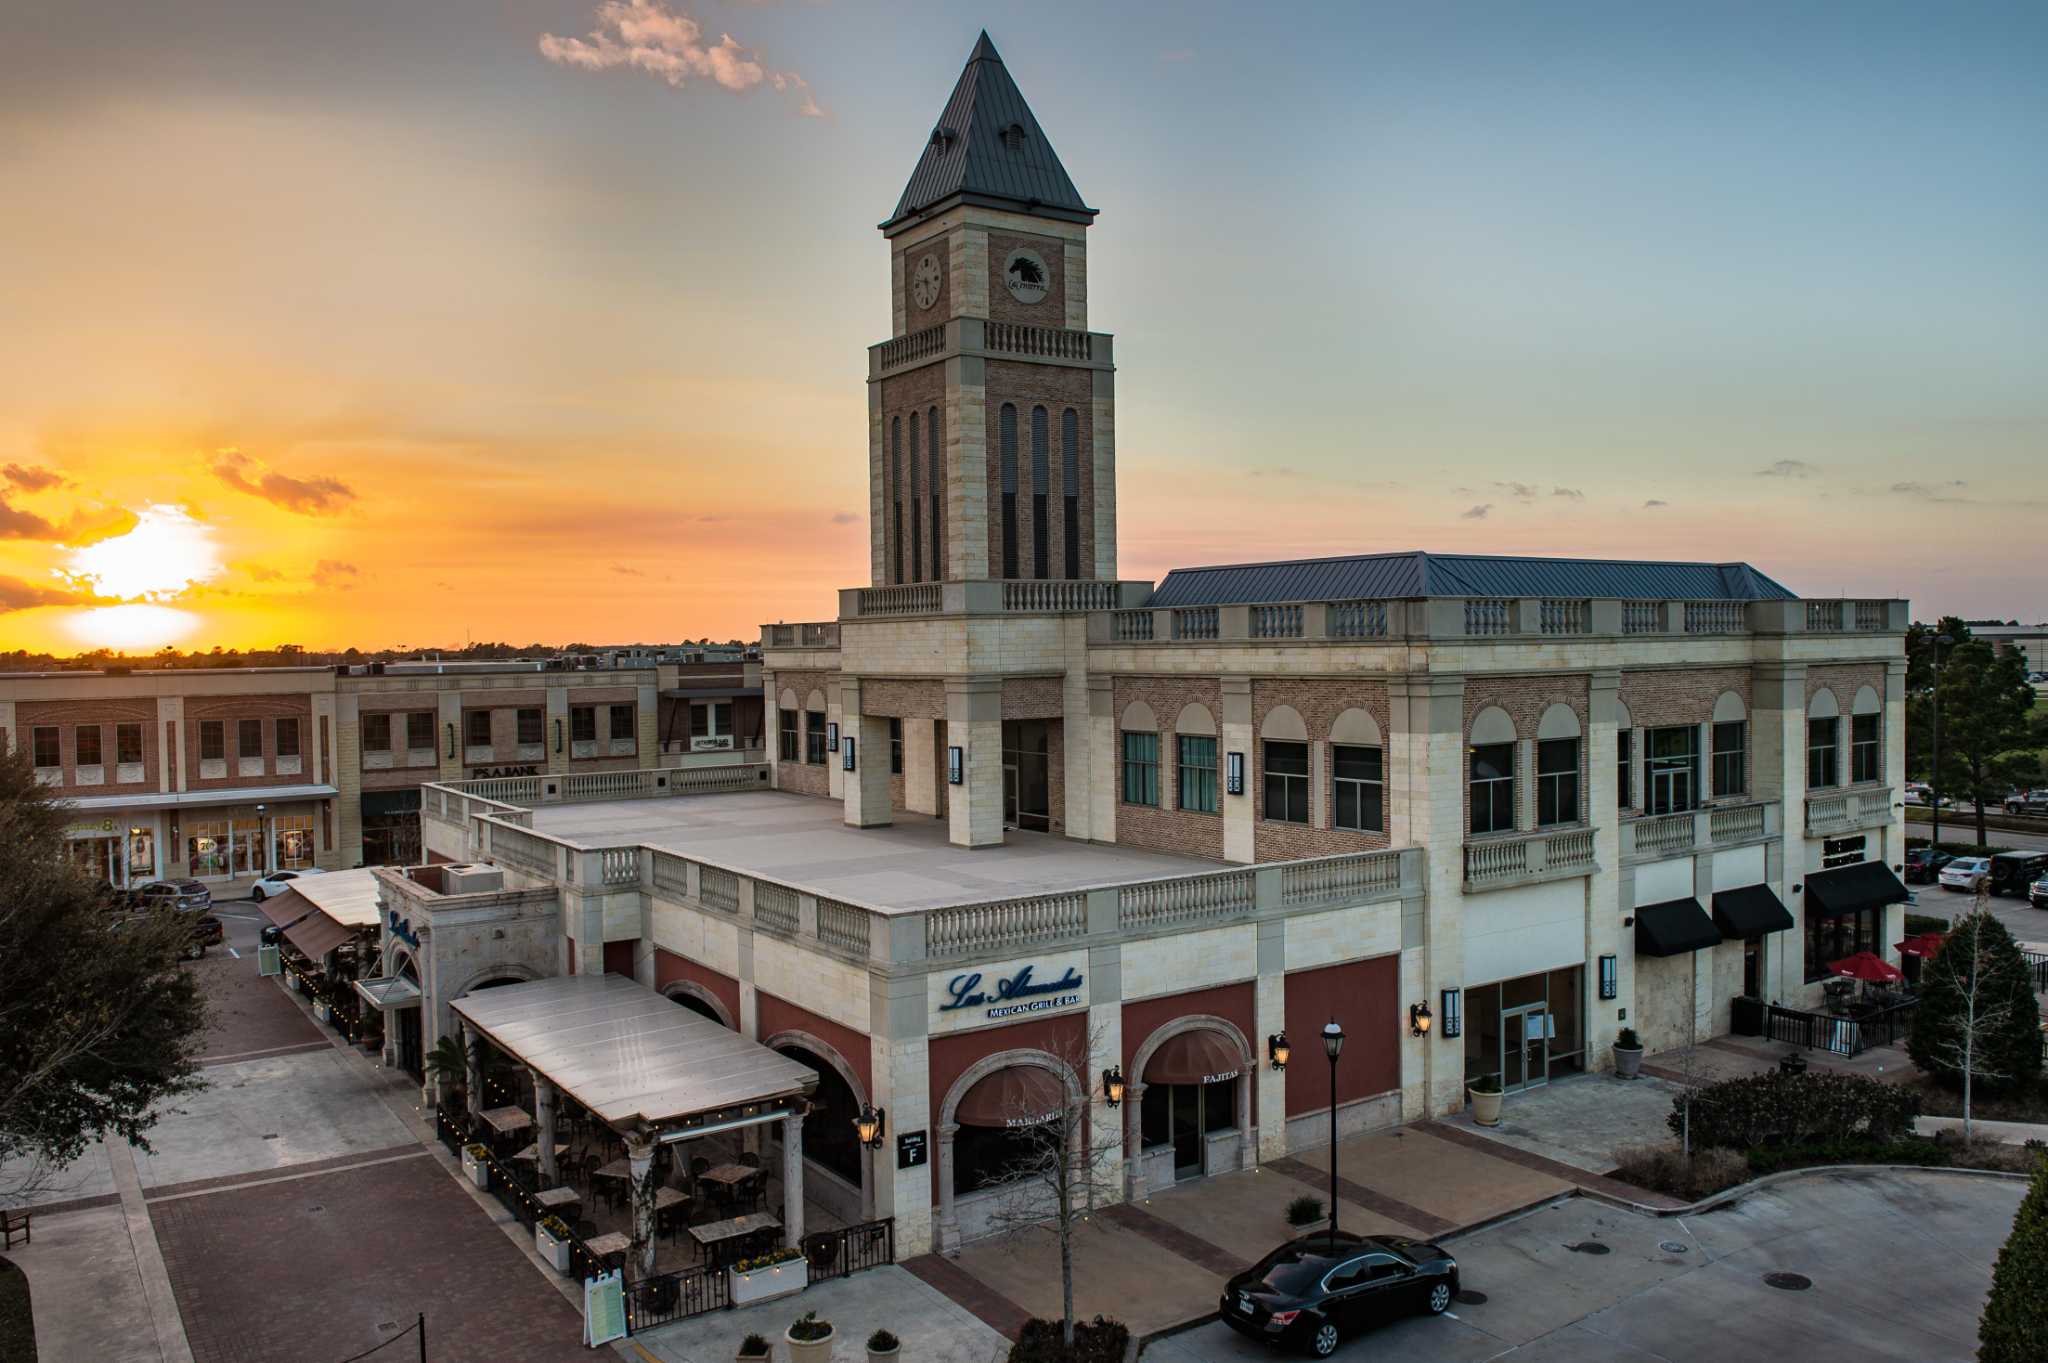 Retail Wrap: Tim Hortons starts expansion to Texas in Houston